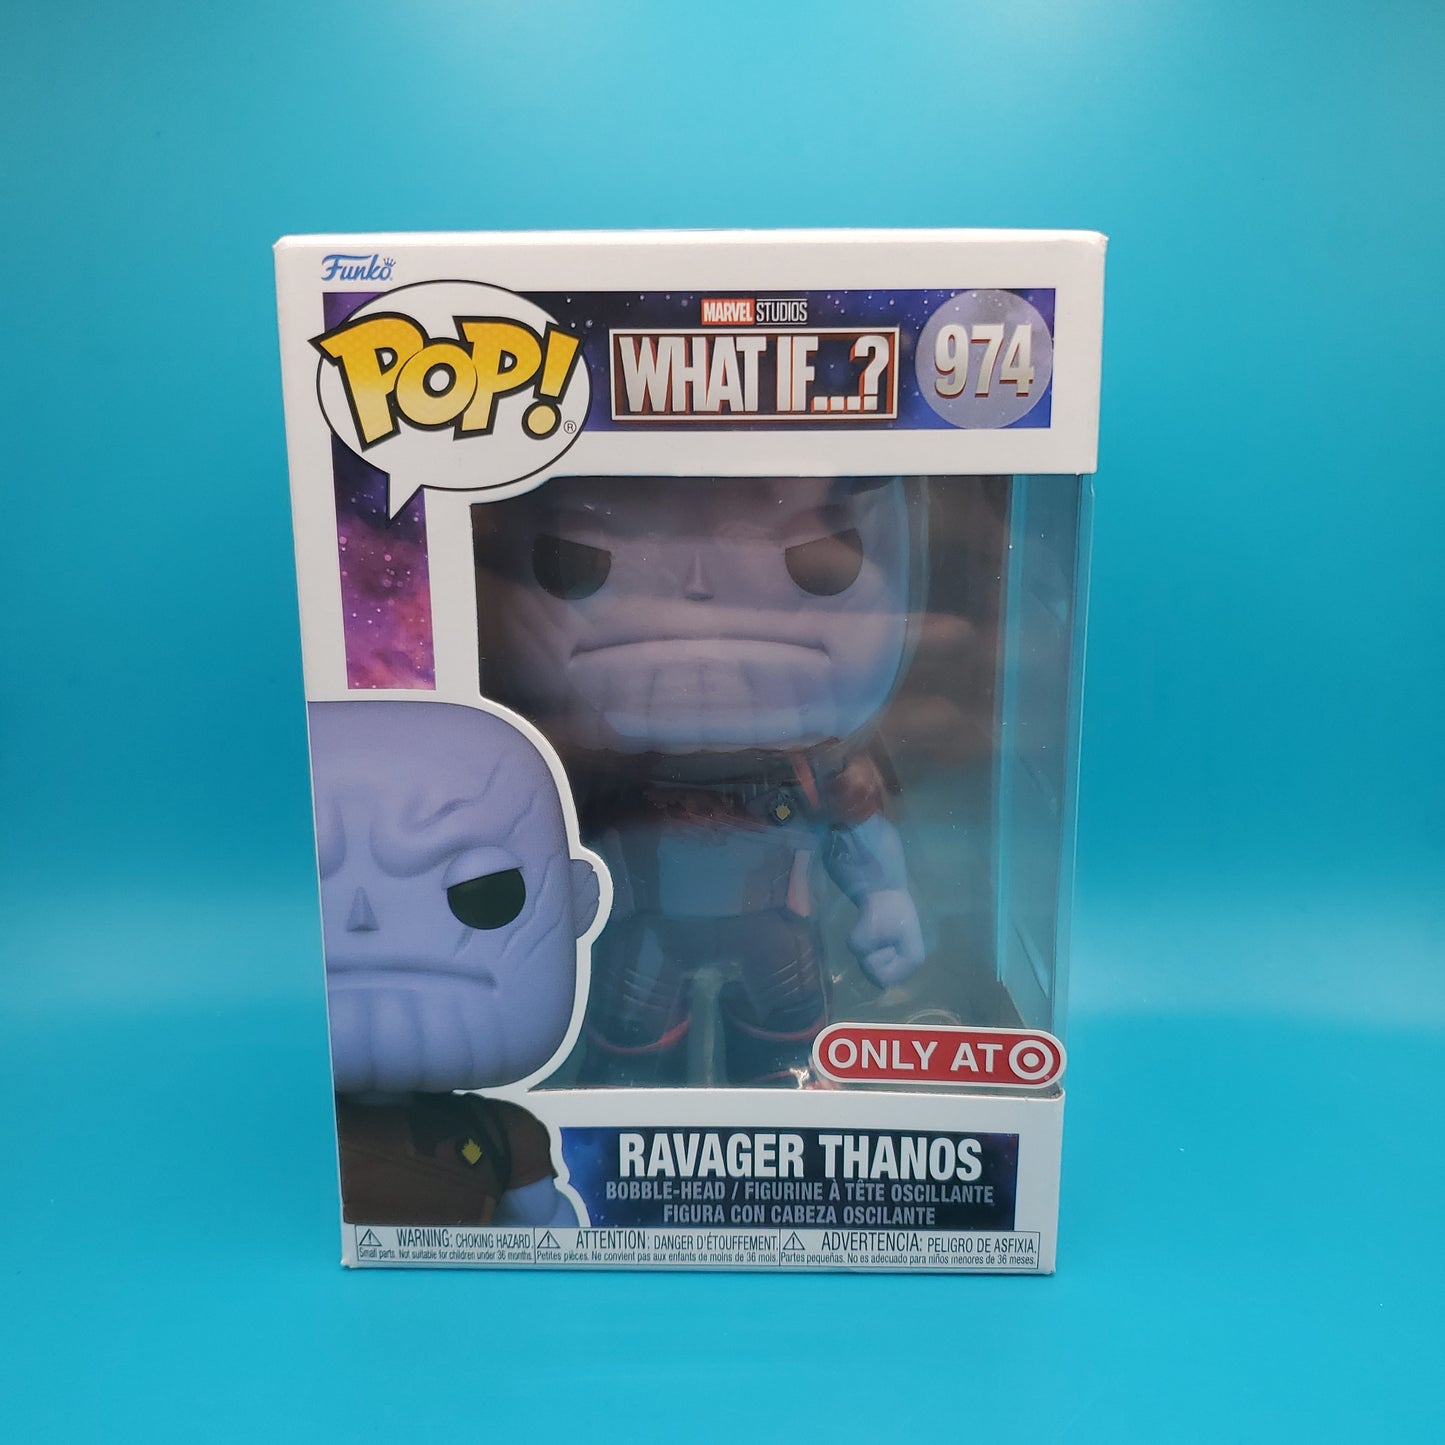 Ravager Thanos - 974 - What If - Target